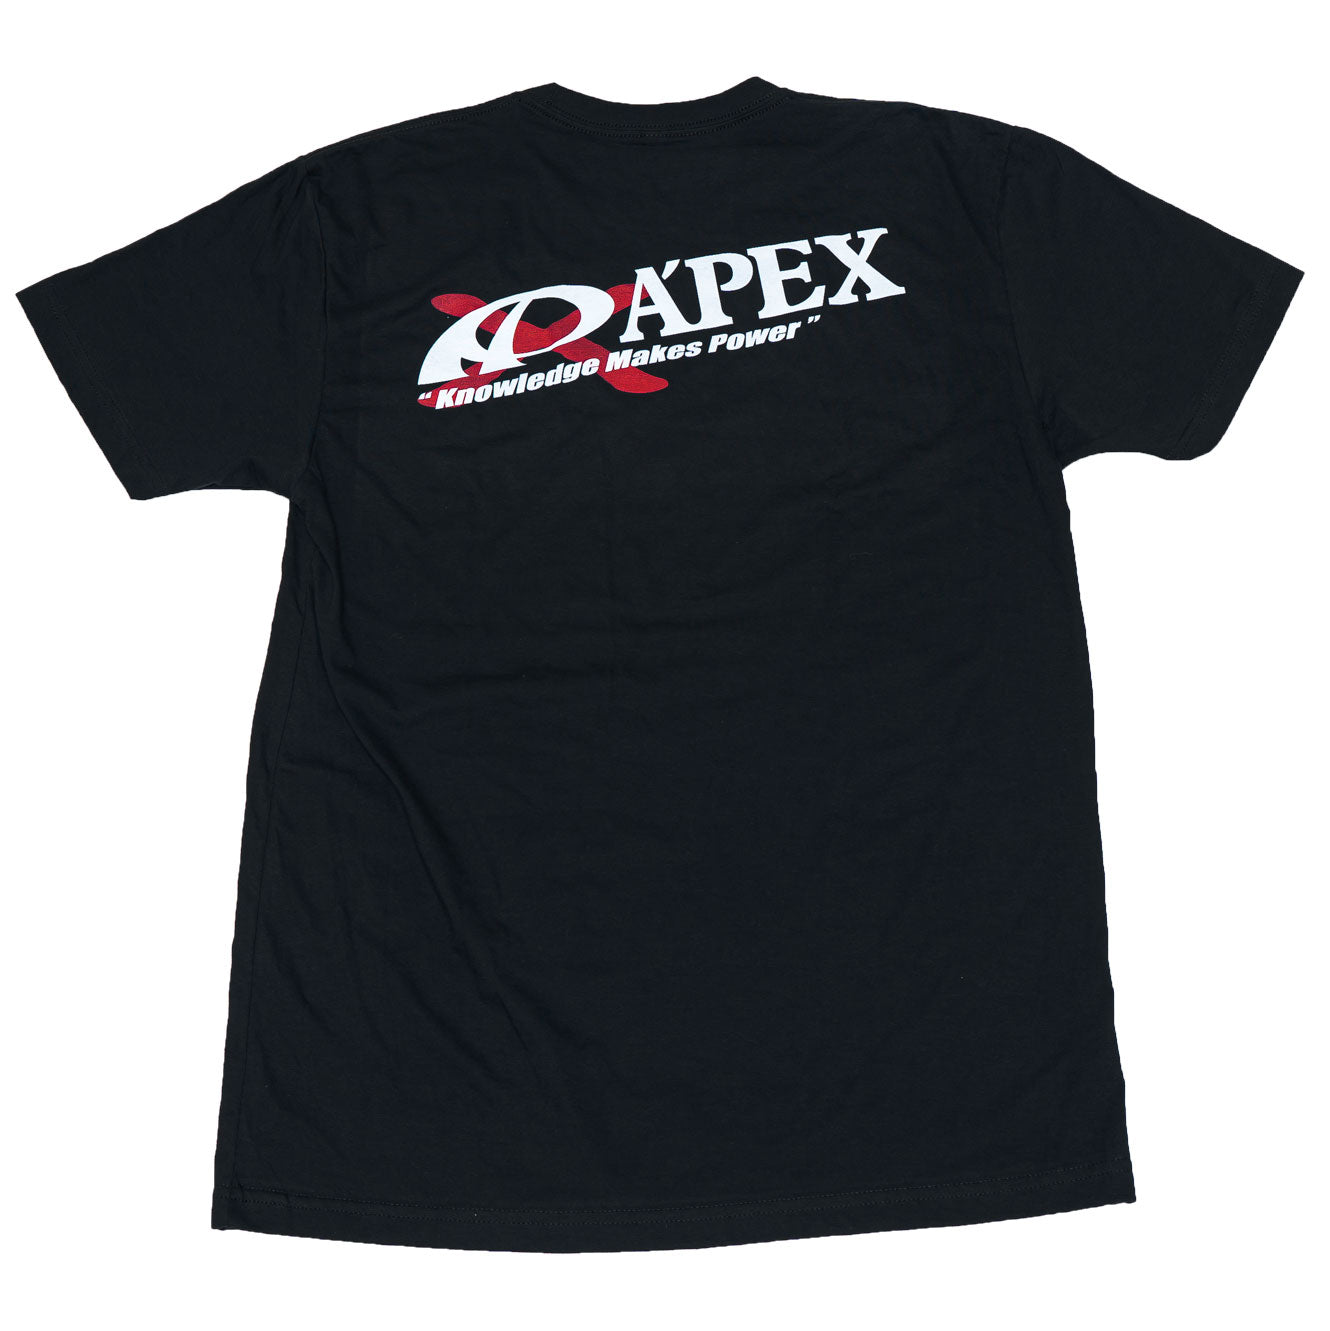 A'PEXi - T-Shirt - APEX-X Circuit Legend - Black - 0